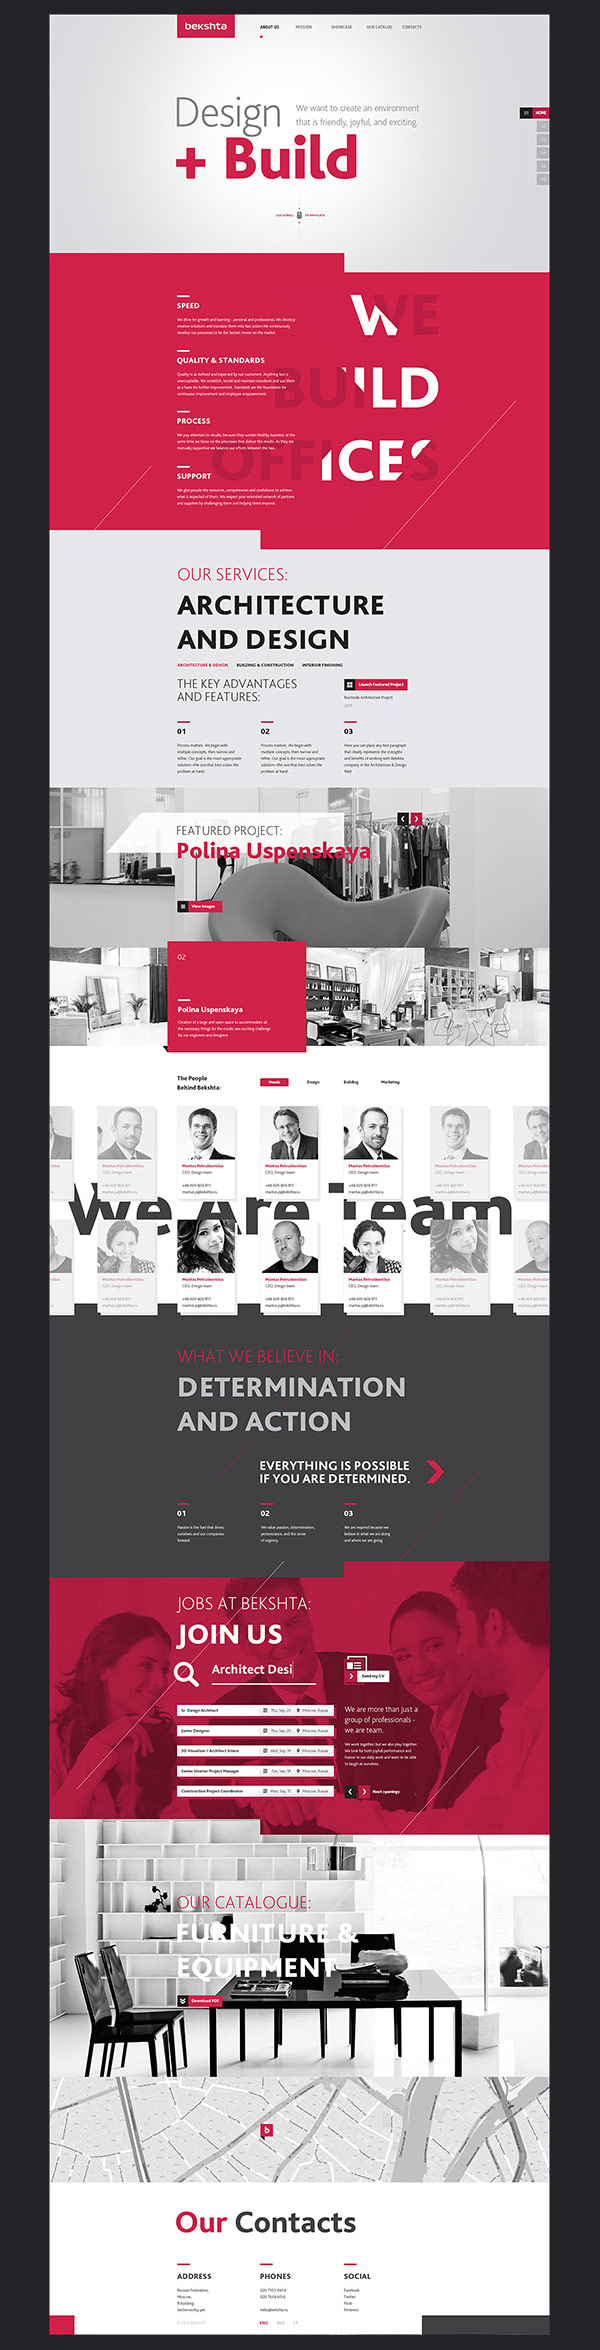 Bekshta Corporate Website Design - art direction, UX / UI research, and web design by Alexey Masalov.